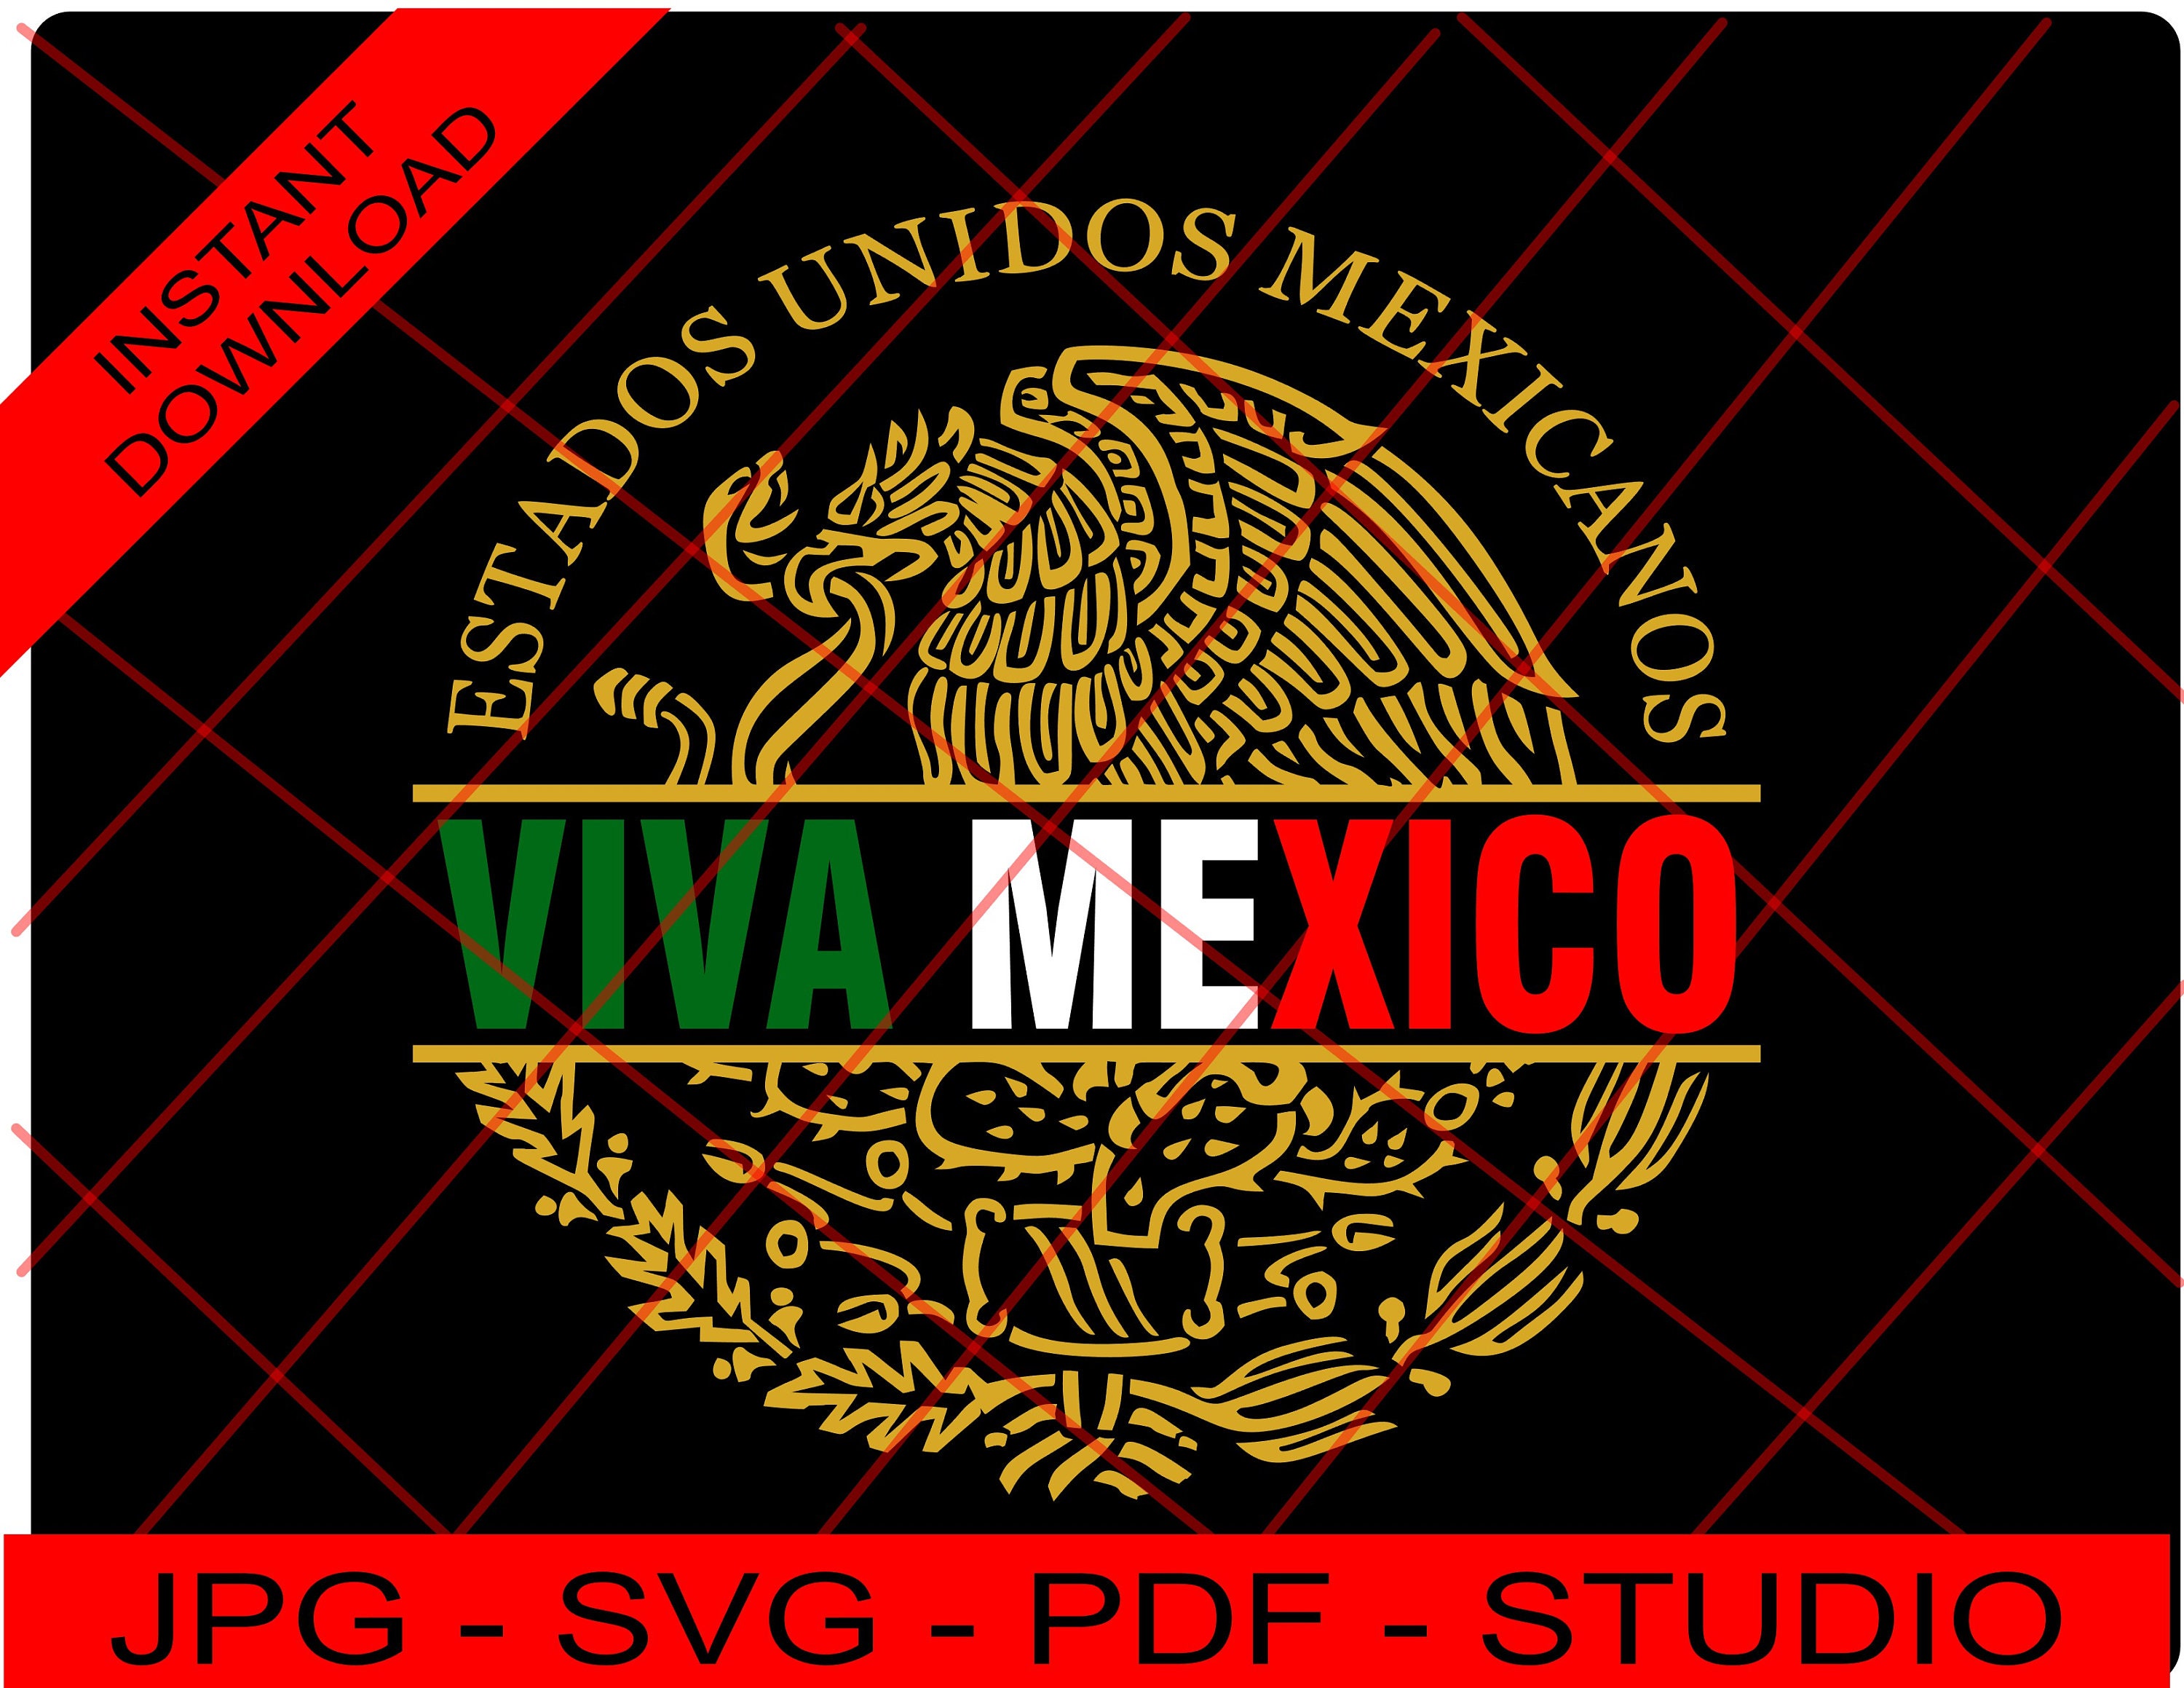 COAT OF ARMS OF AGUILA MEXICO Logo of Viva Mexico Design - Etsy